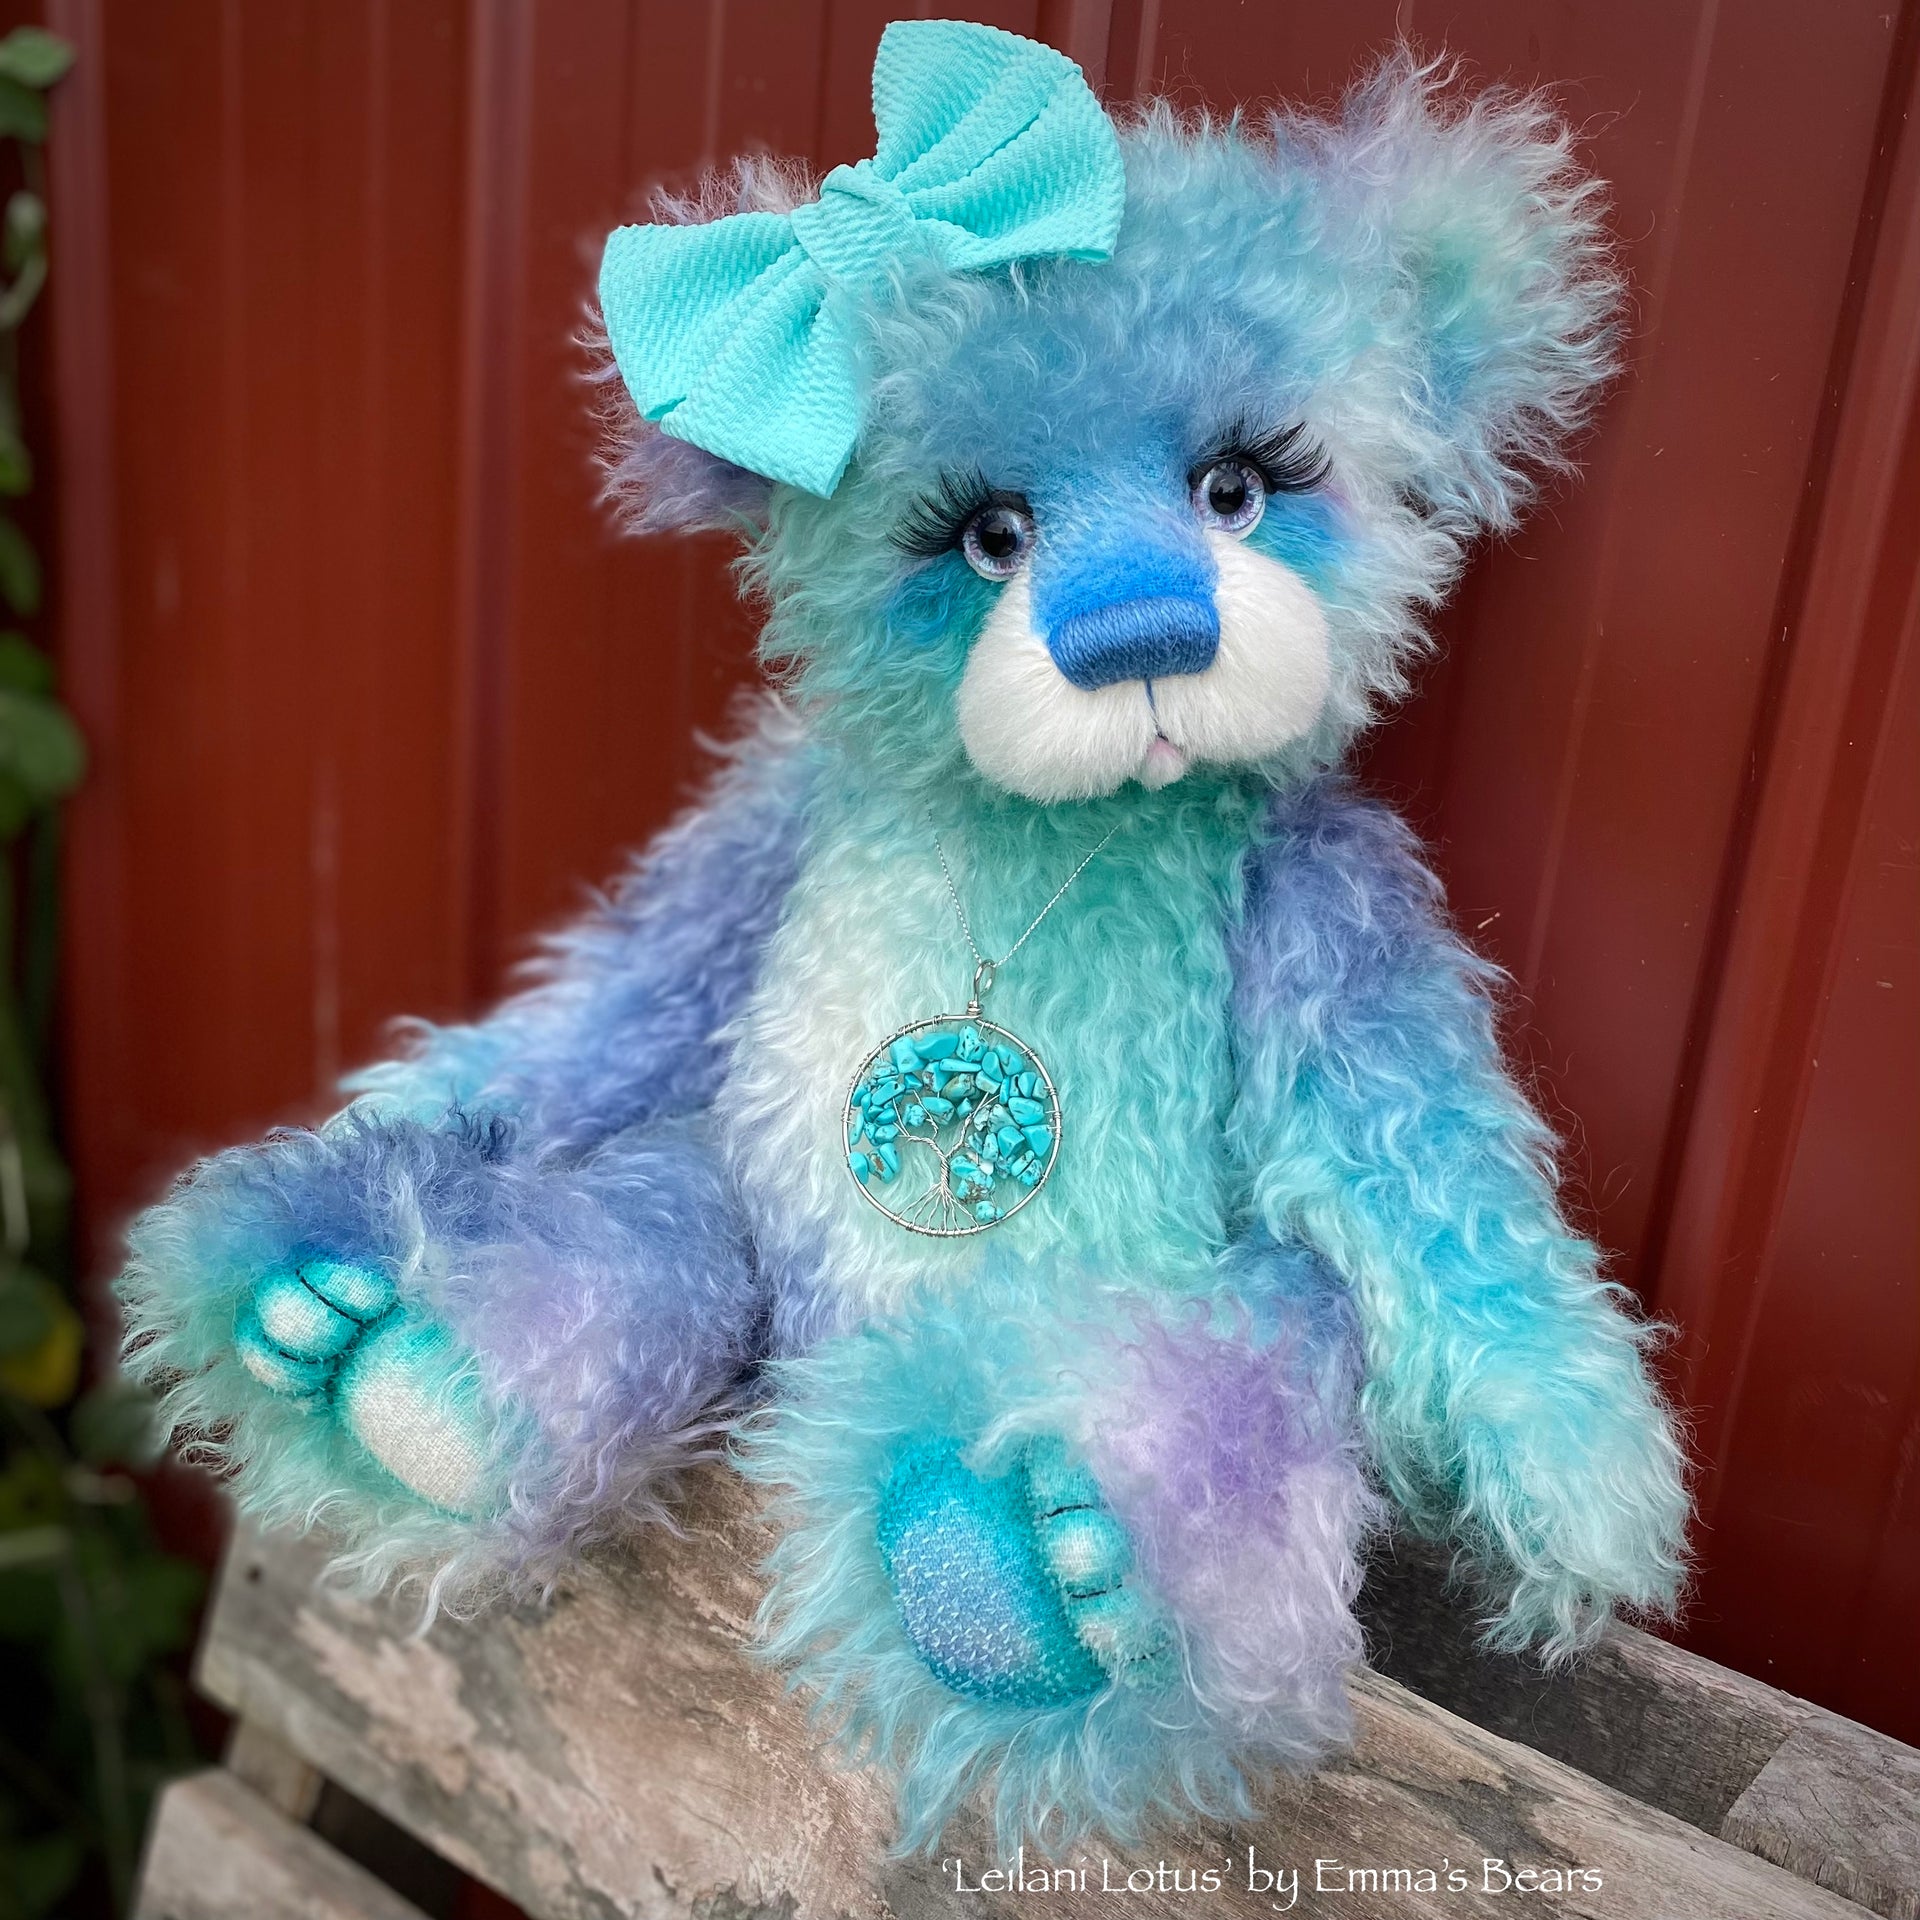 Leilani Lotus - 18" Hand-Dyed Mohair Artist Bear by Emma's Bears - OOAK